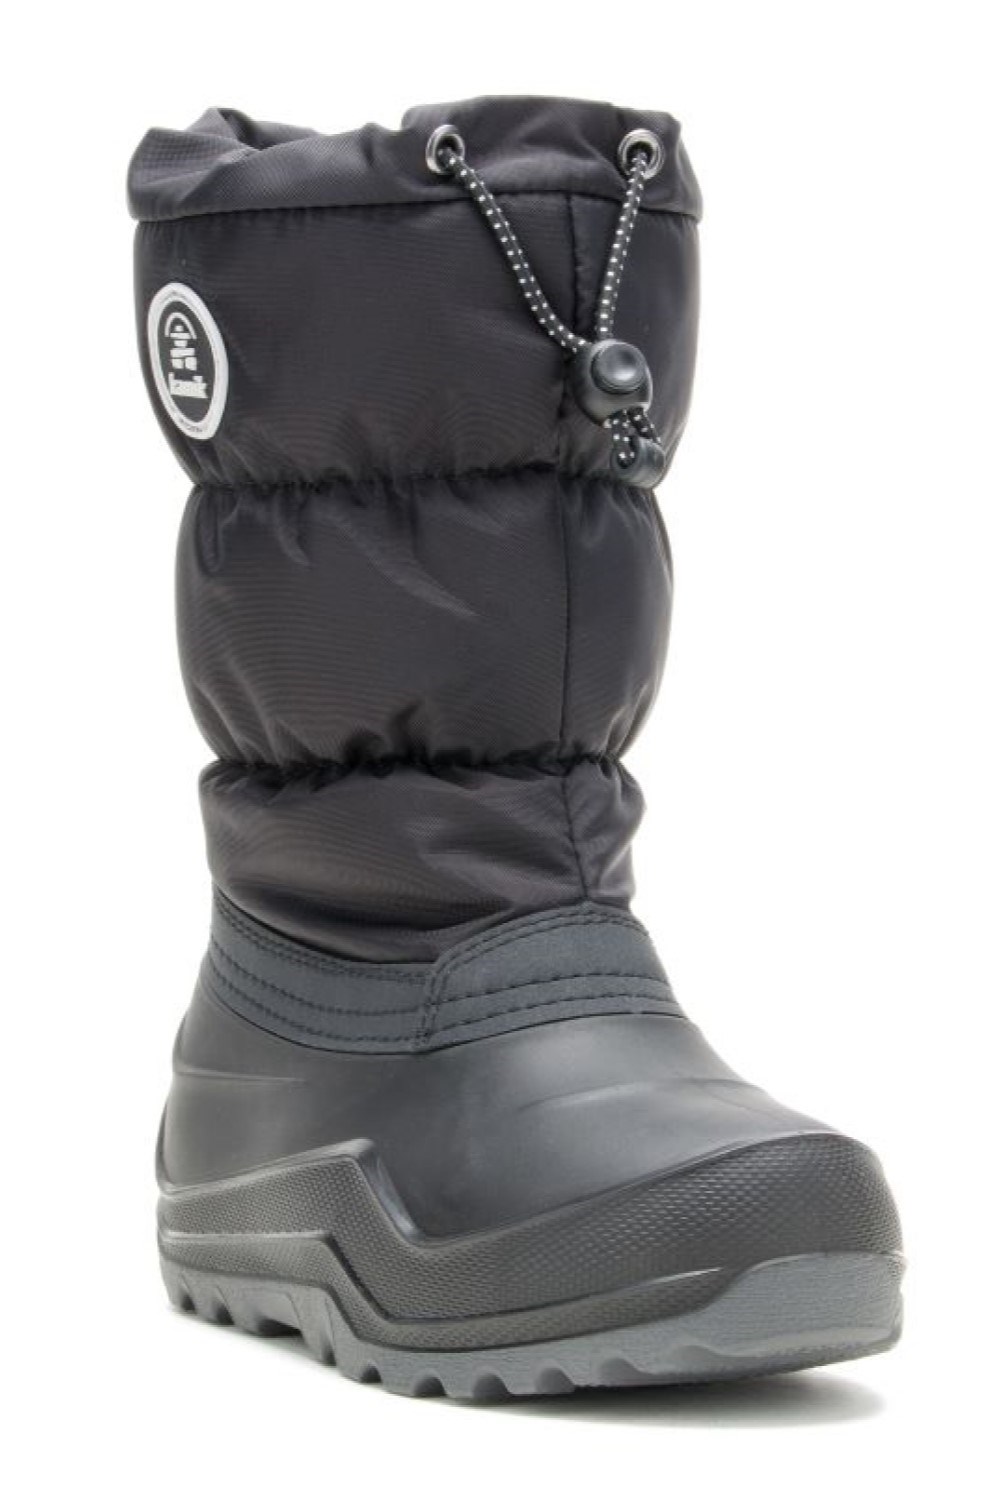 Snowcozy Kids Snow Boots -